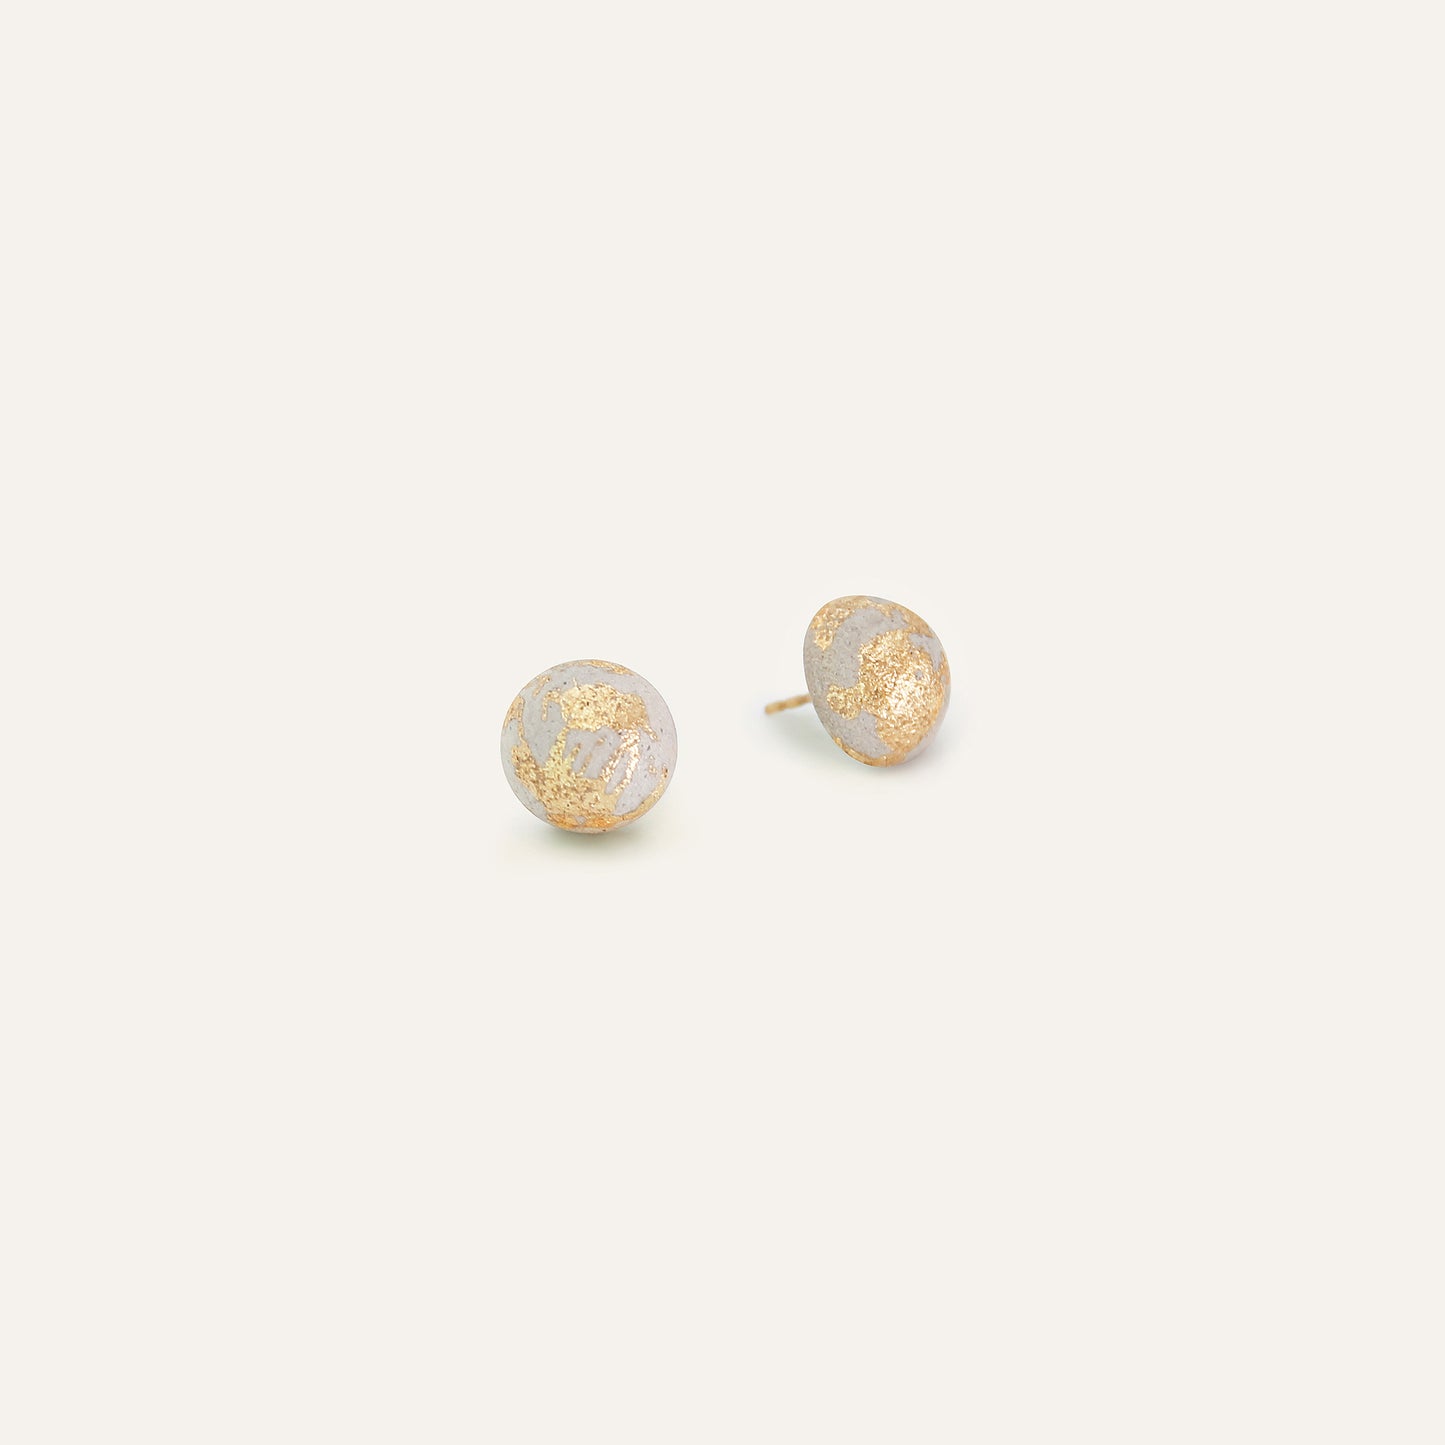 Concrete Sphere Stud Earrings - Grey/Gold